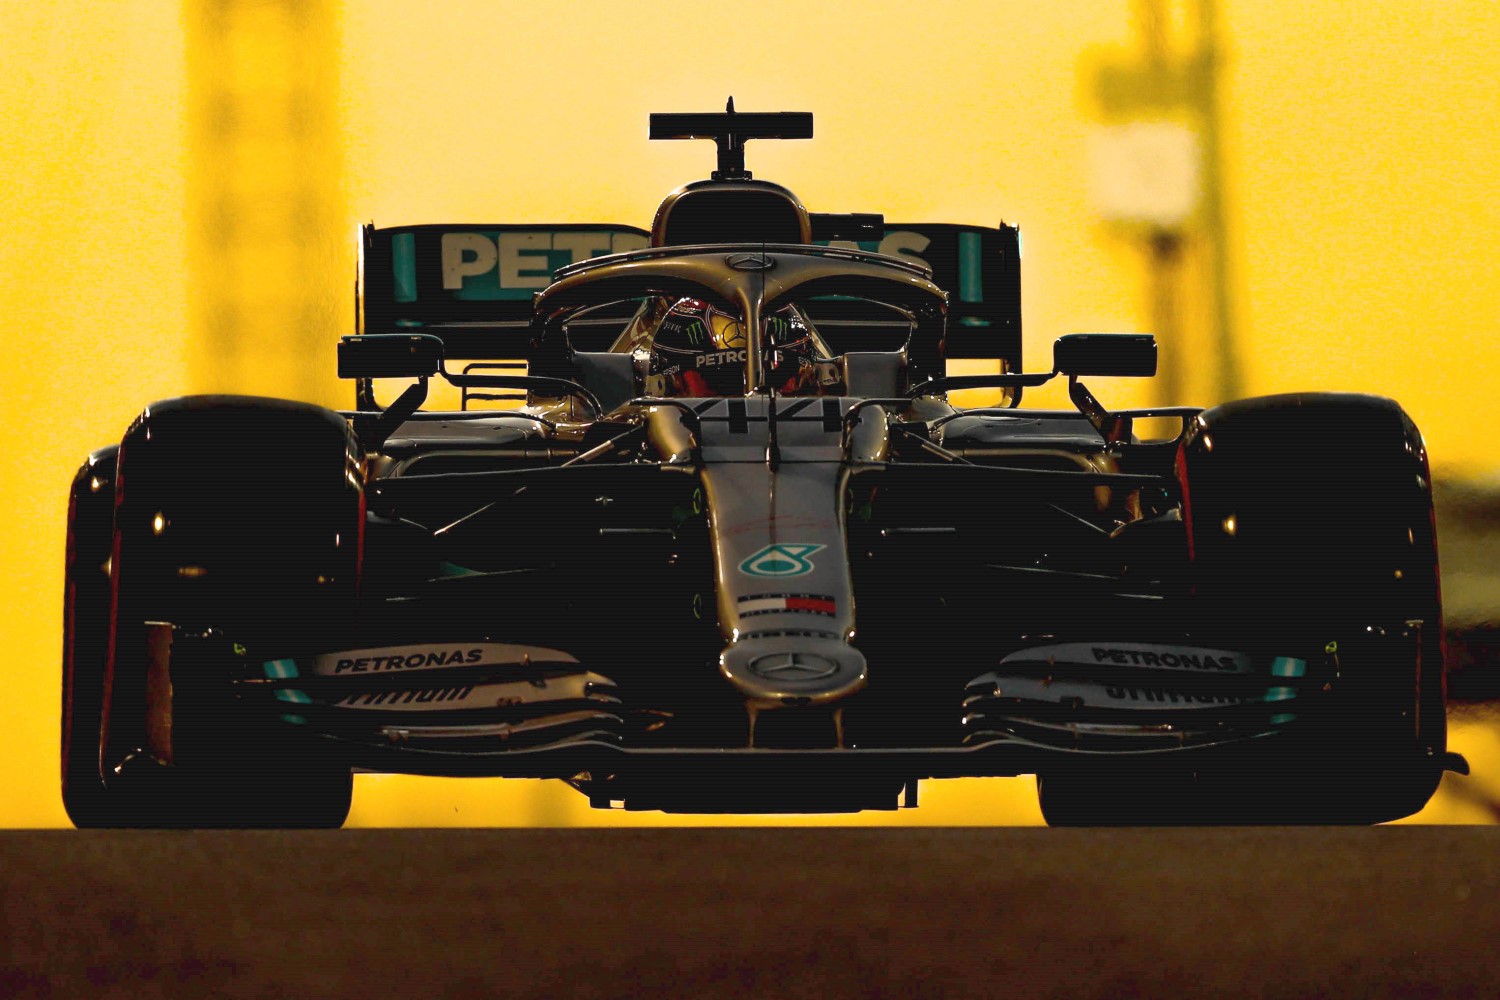 Hamilton gets 5th pole of 2019 under the Abu Dhabi lights